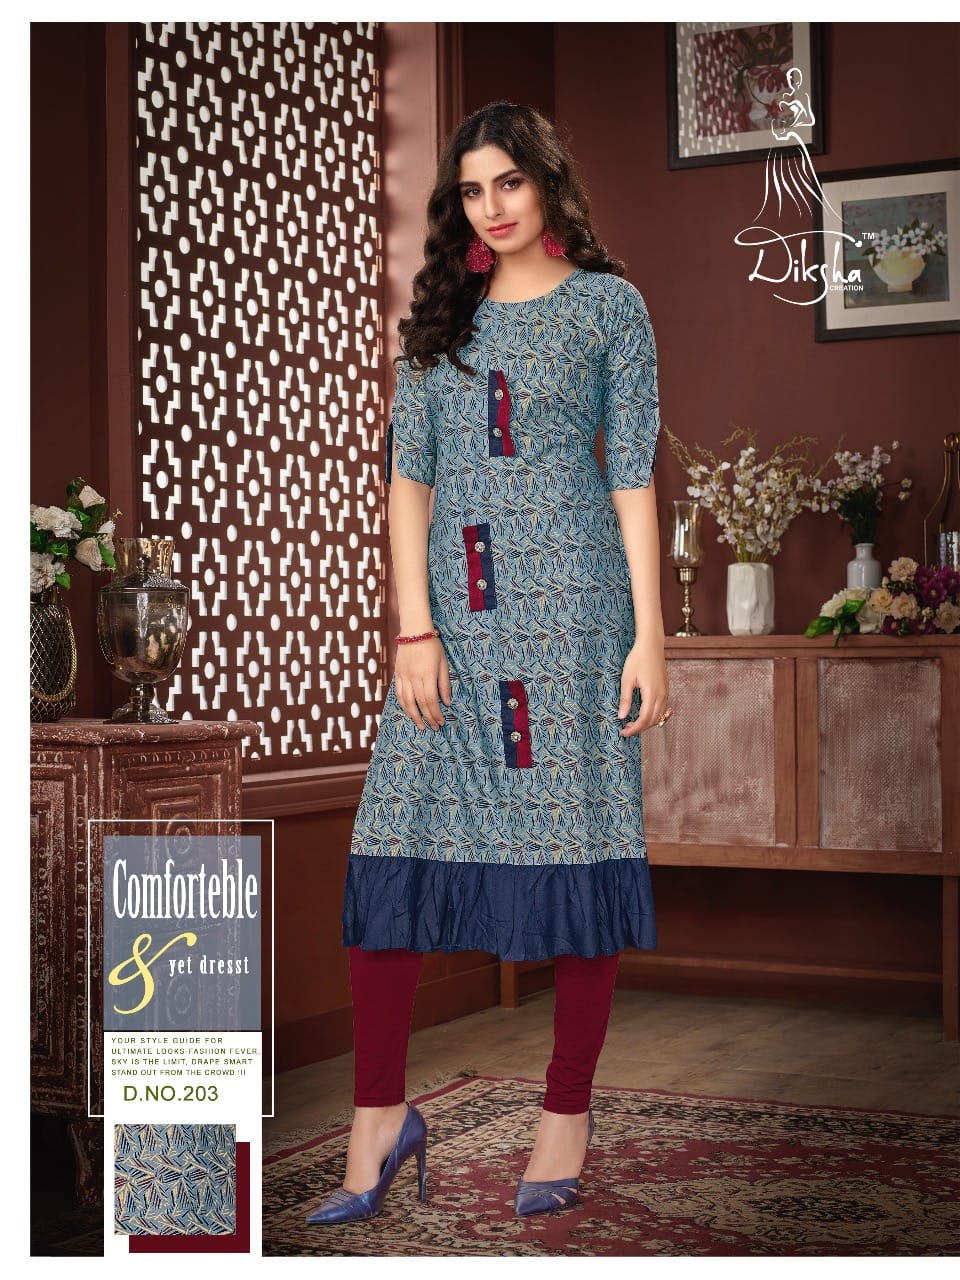 Diksha fashion rich berry vol 2 rayon printed kurties collection dealer